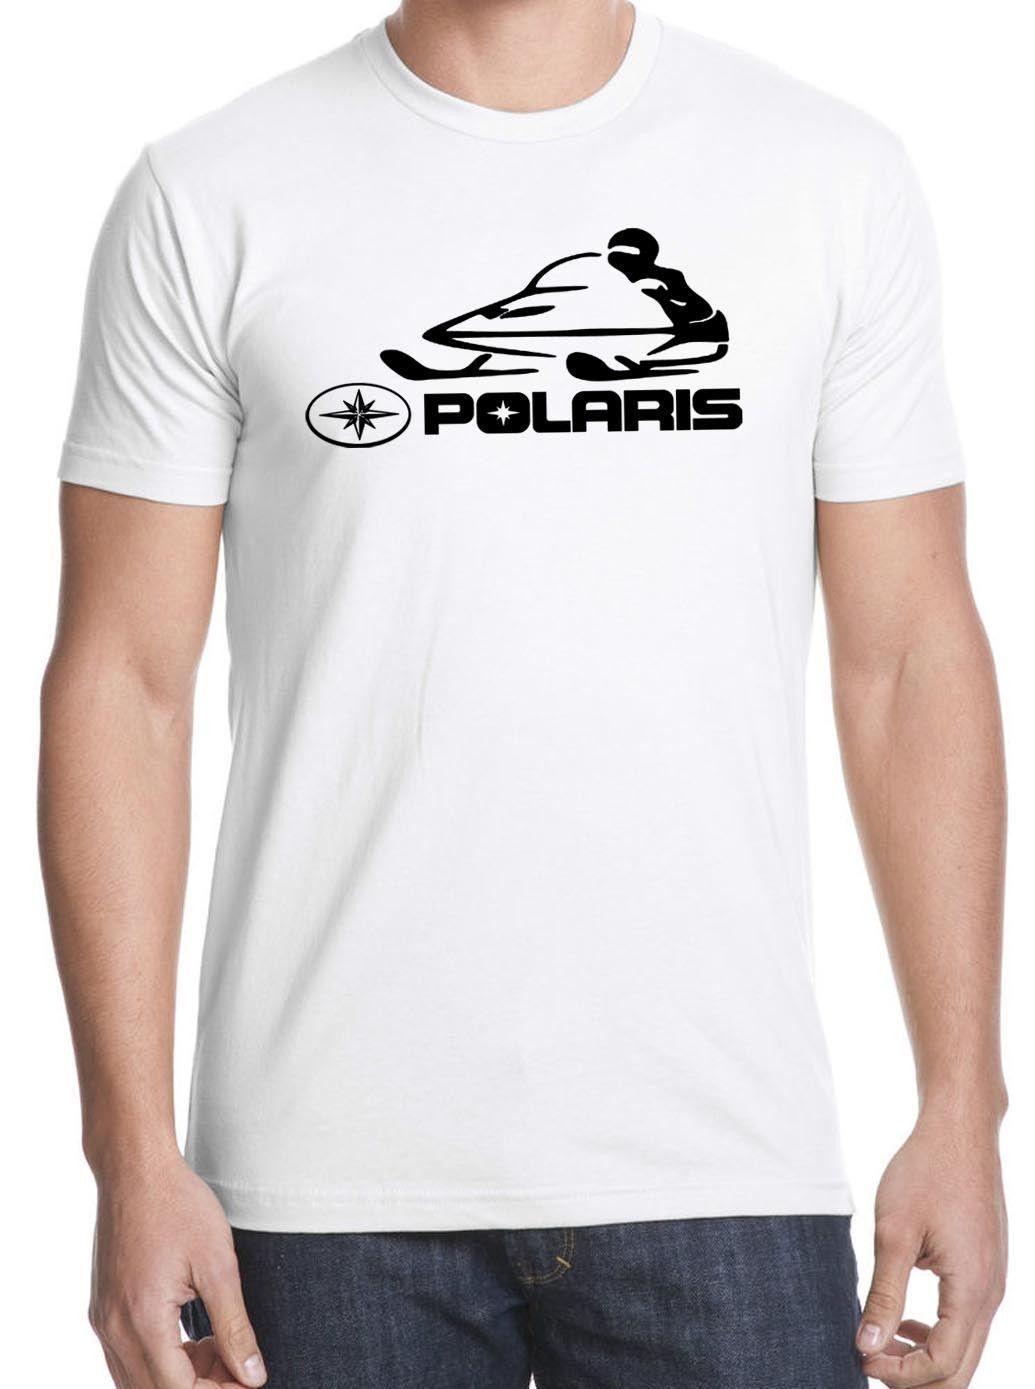 The 100 Polaris Logo - POLARIS SNOWMOBILE T SHIRT Vntage Logo Comfortable T Shirt Casual ...